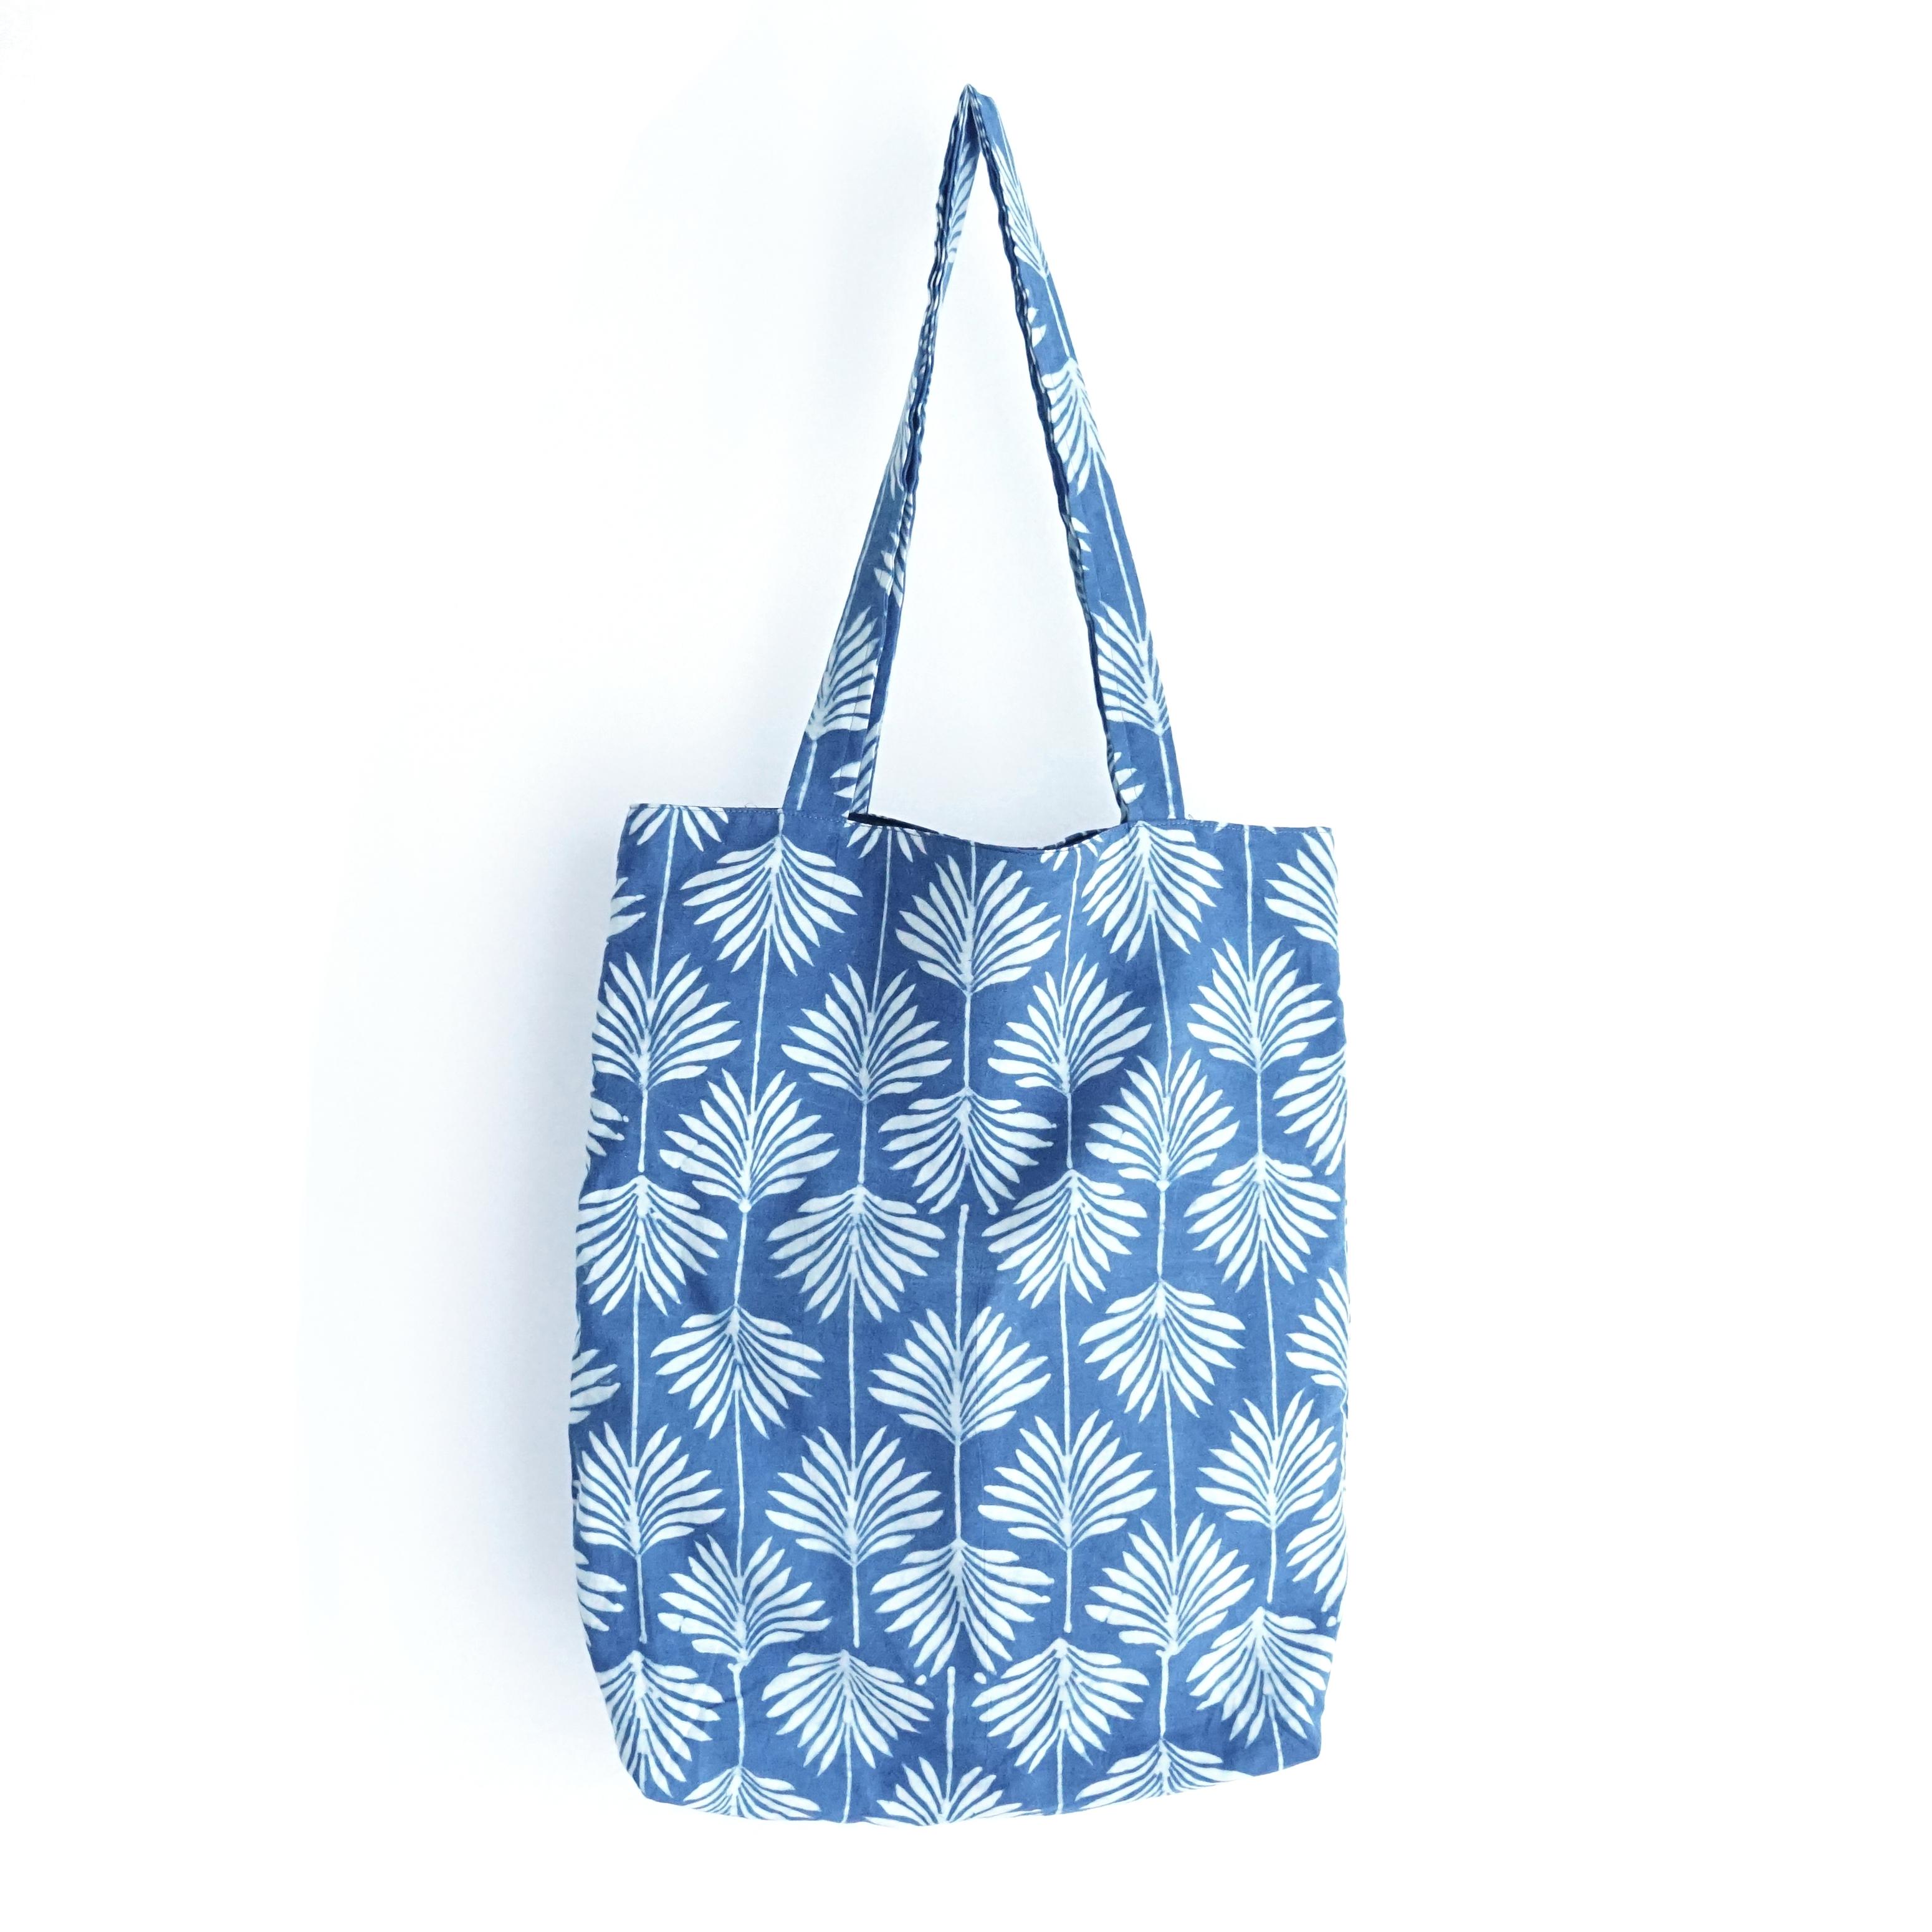 1 - TB015 - Block-Printed Tote Bag - Indigo - Palm Print - Closed